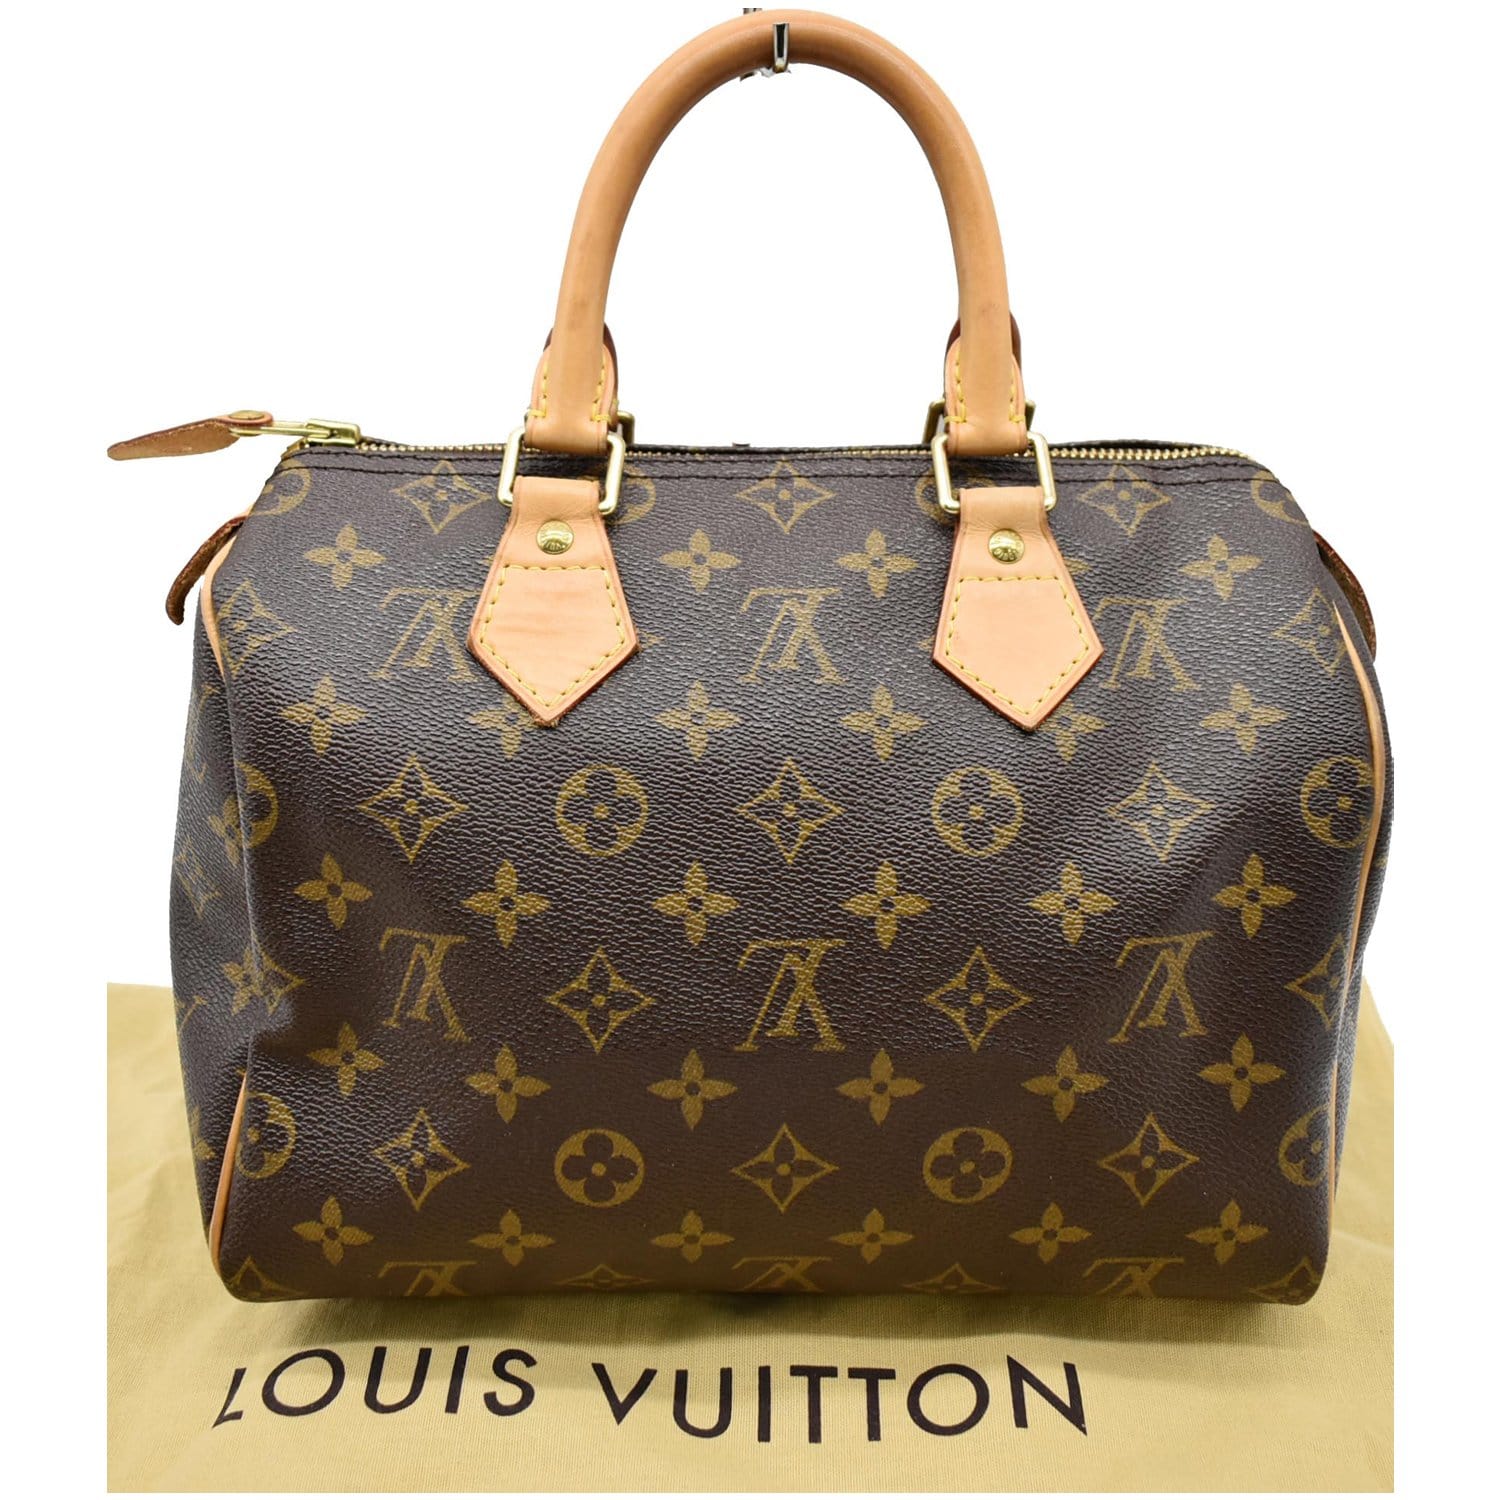 Vintage Louis Vuitton Speedy